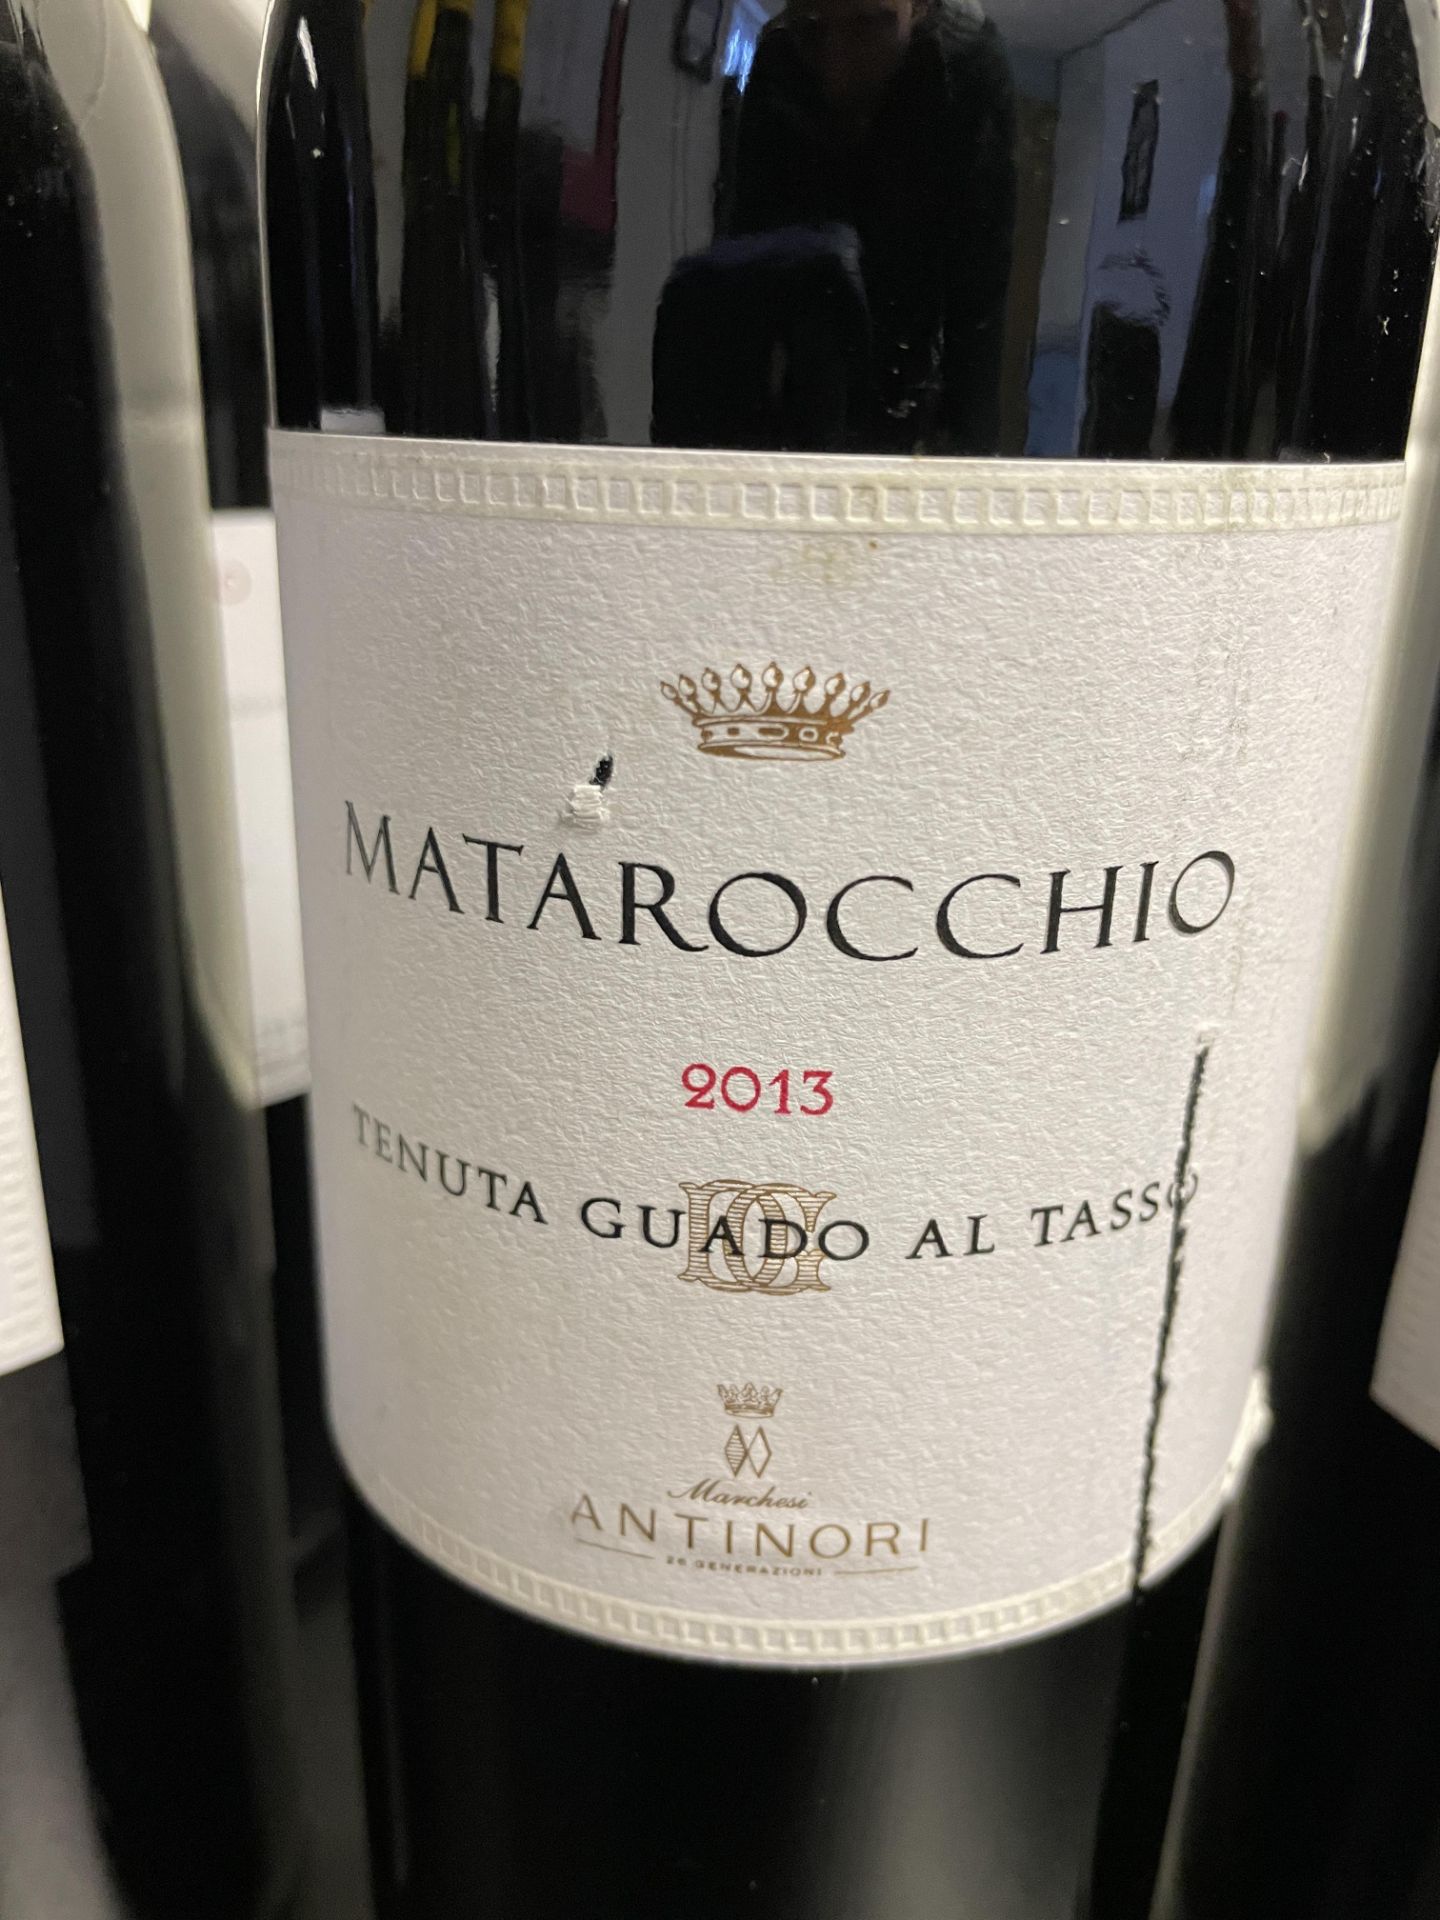 2 x Bottles of 2013 Marchesi Antinori Tenuta Guado Al Tasso Matarocchio Bolgheri Red Wine - RRP £760 - Bild 3 aus 12